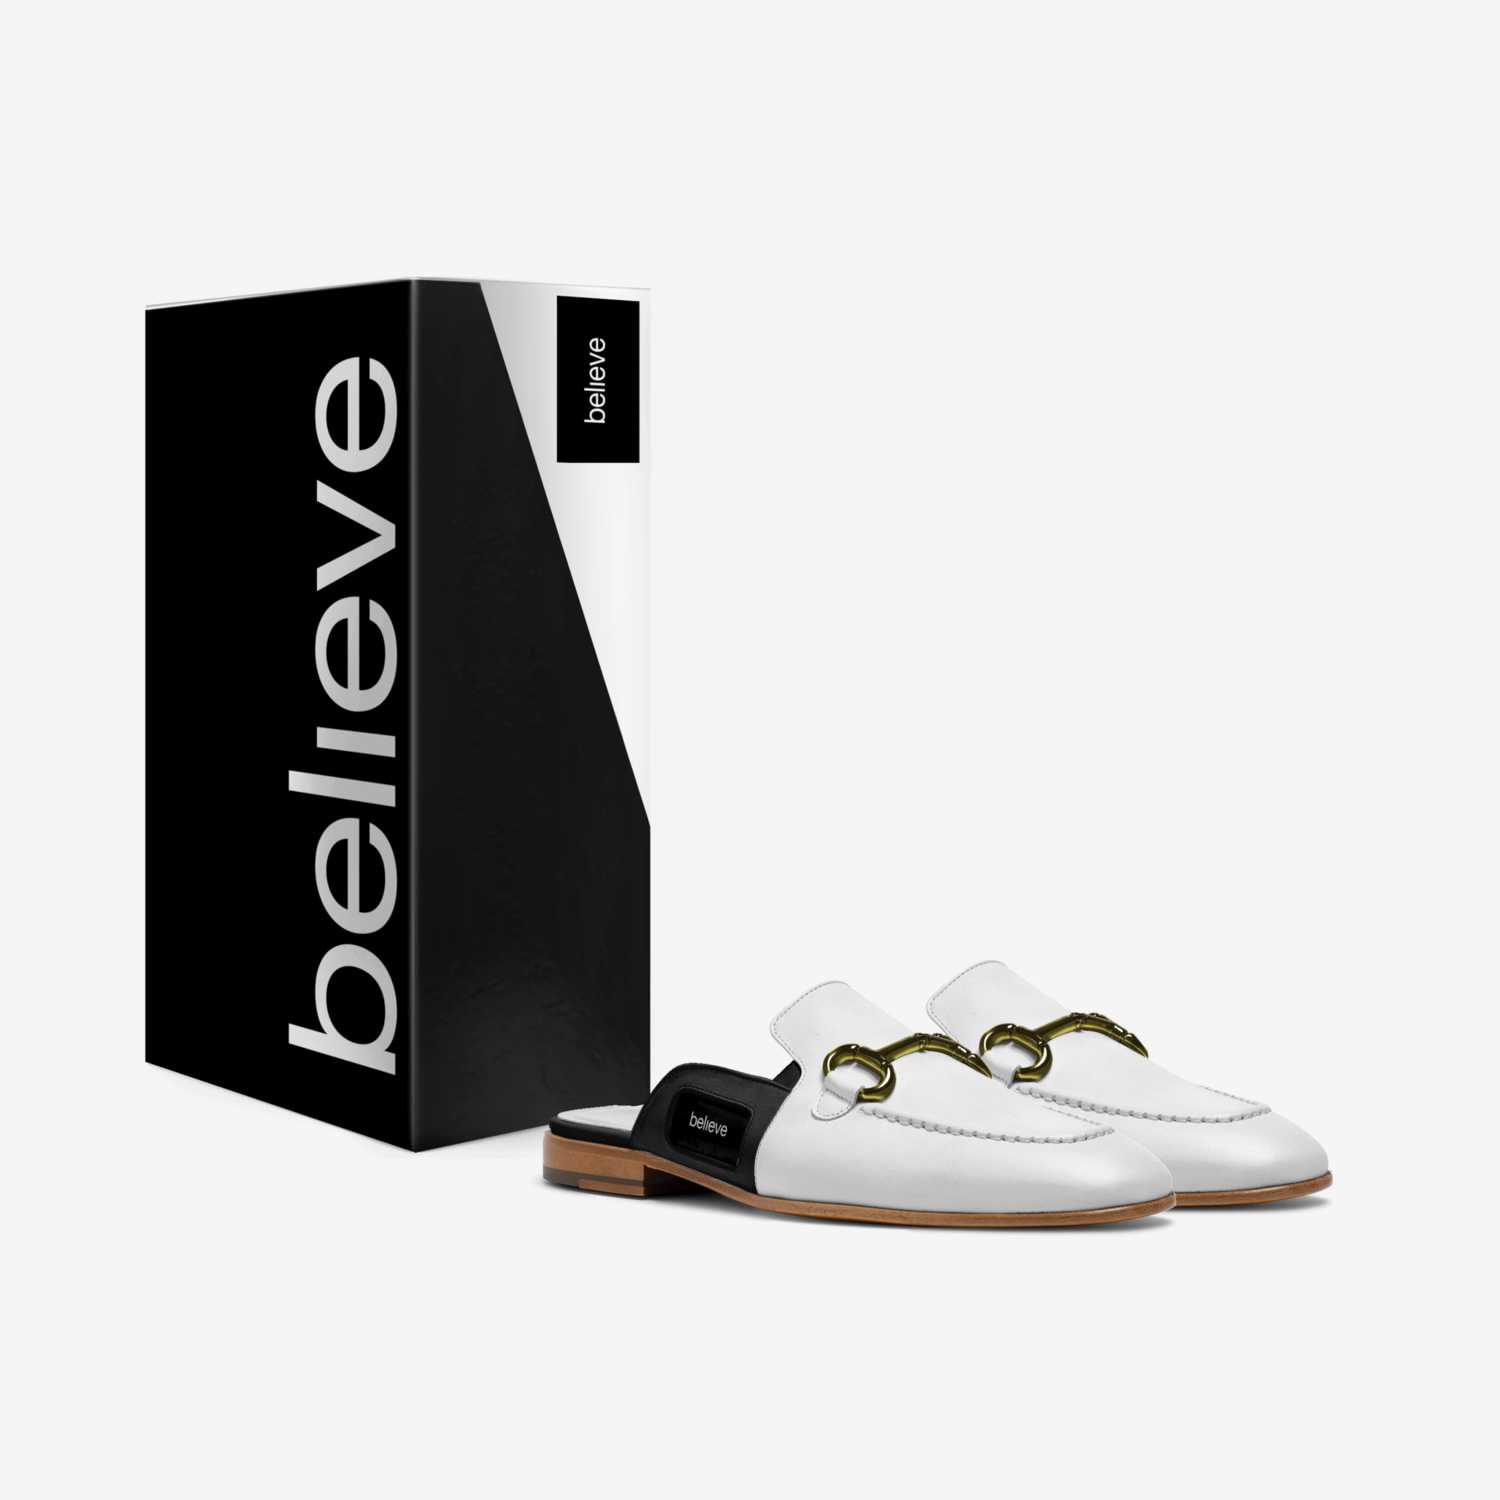 believe 1.1 custom made in Italy shoes by Derek Jones | Box view